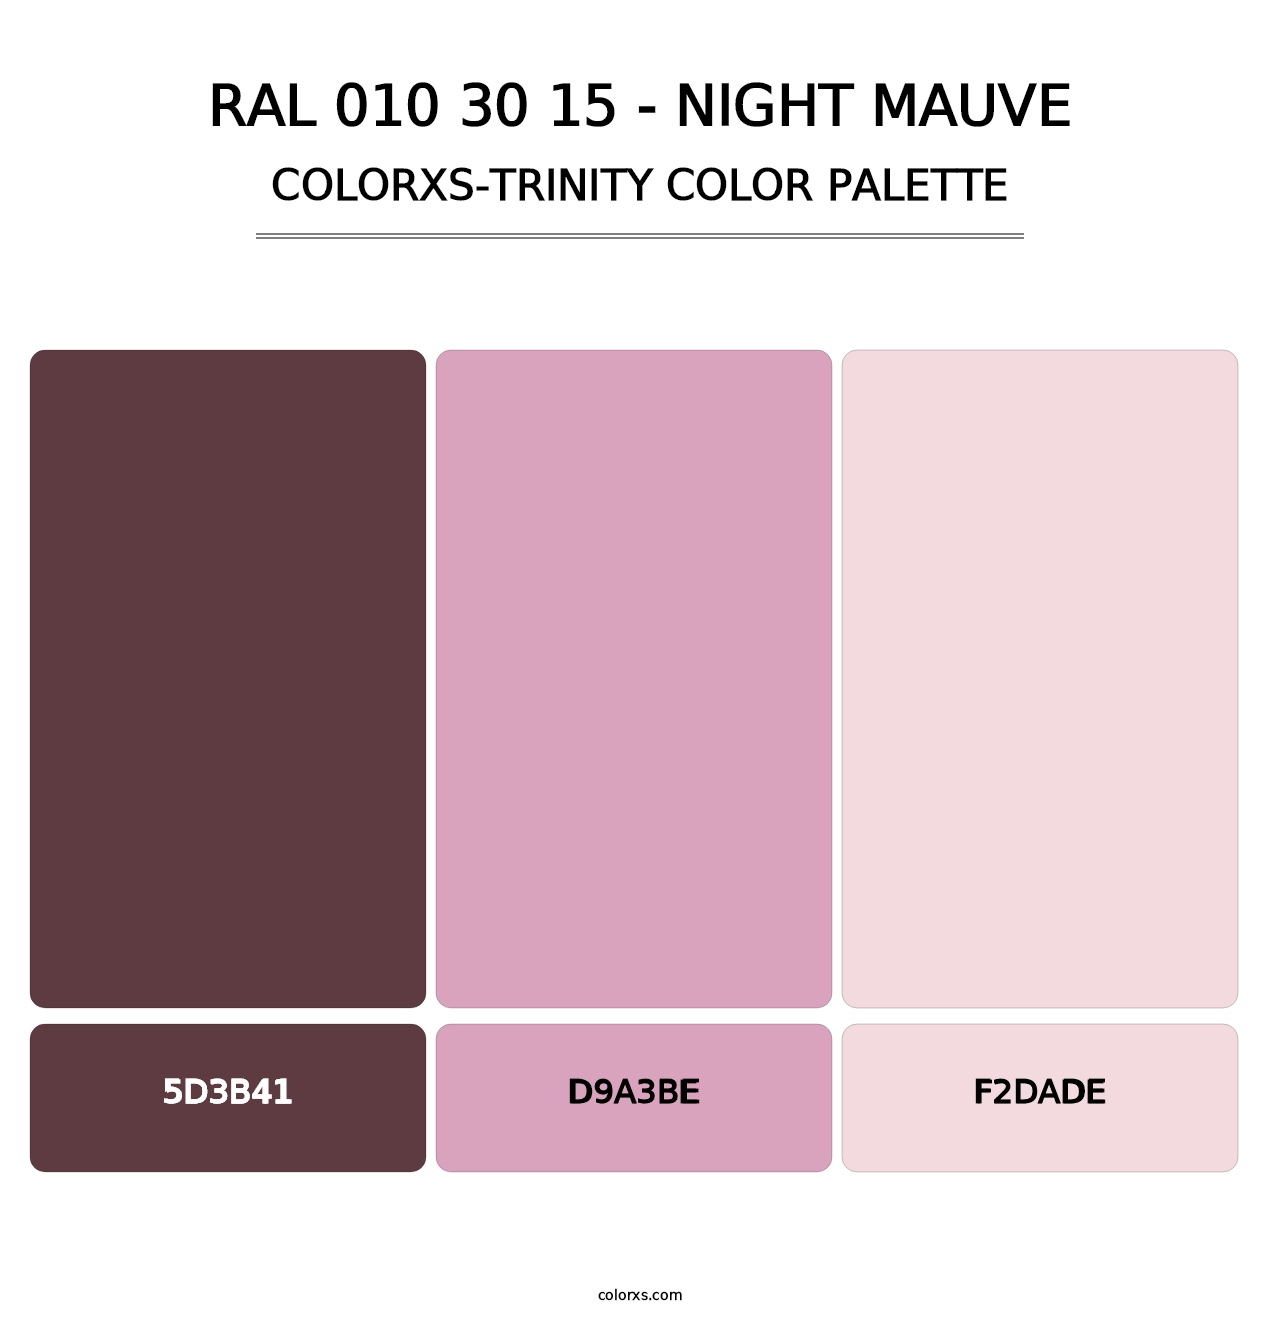 RAL 010 30 15 - Night Mauve - Colorxs Trinity Palette